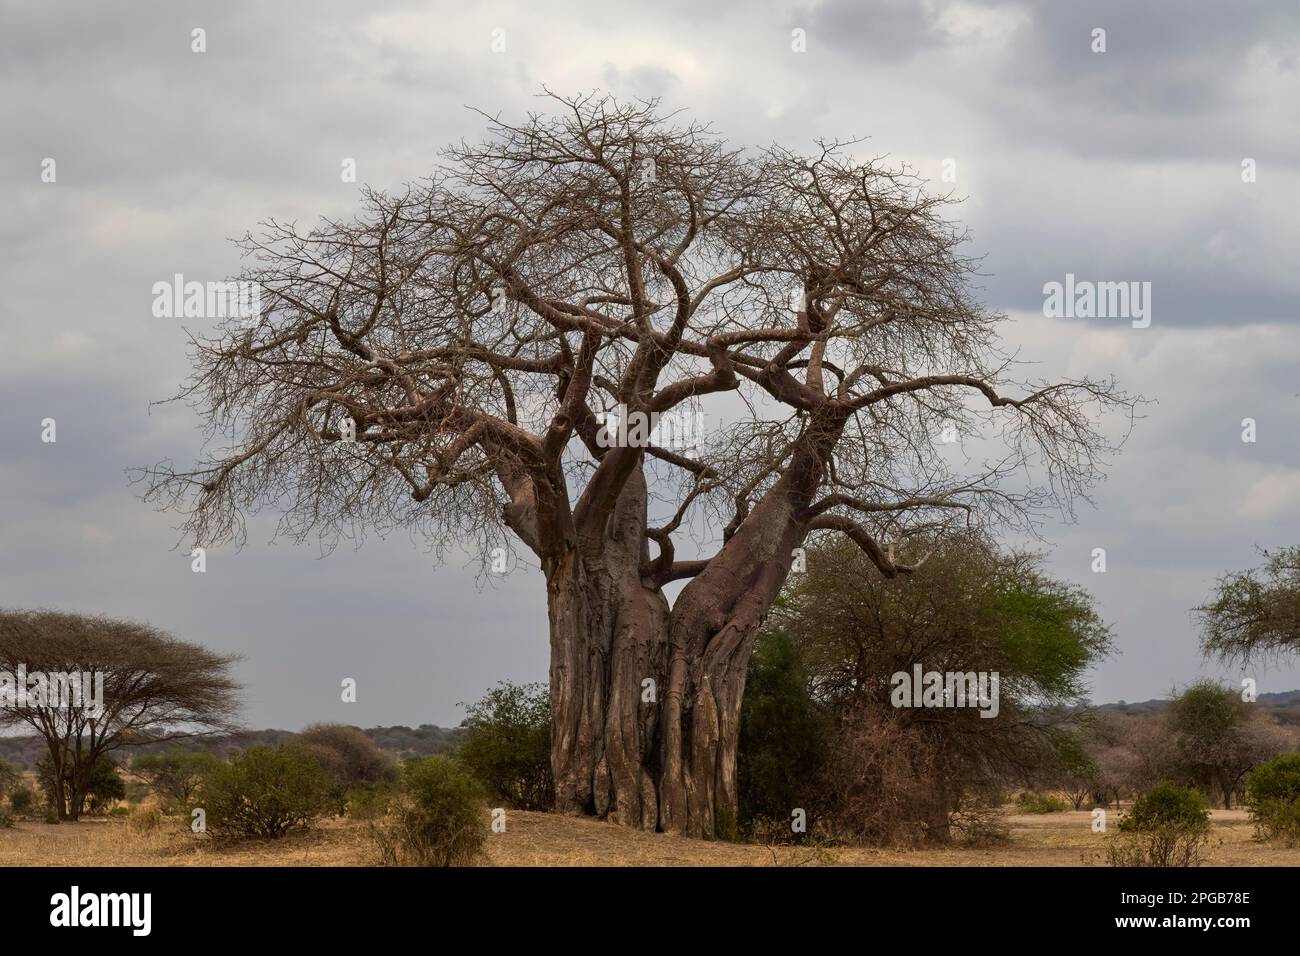 African baobab (Adansonia digitata), also known as Baobab tree, Tarangire National Park, Tanzania, East Africa Stock Photo